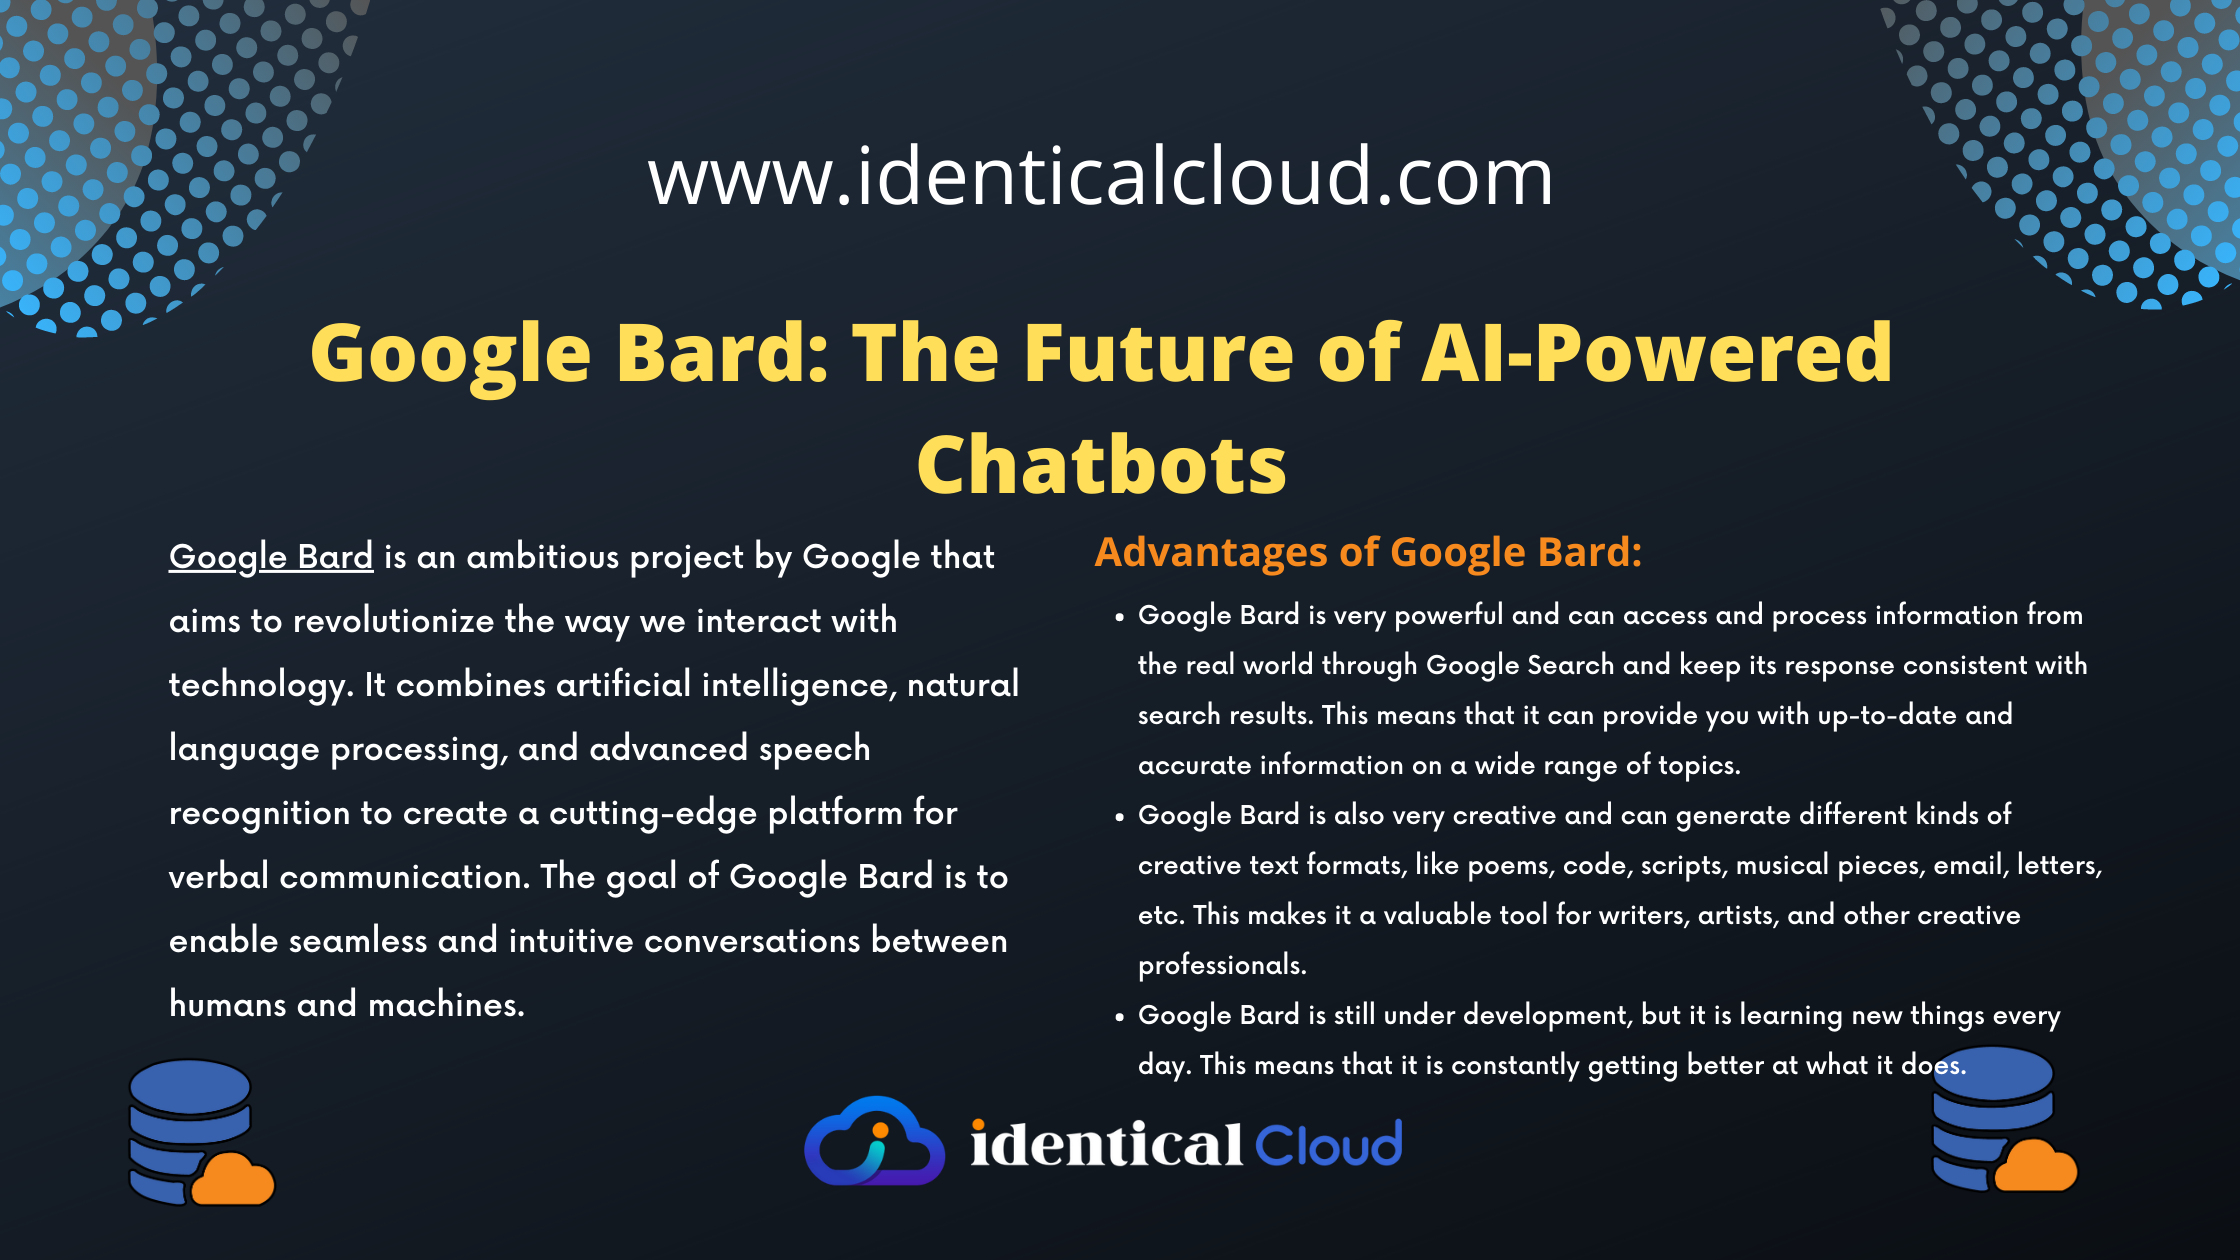 Google Bard: The Future of AI-Powered Chatbots - identicalcloud.com